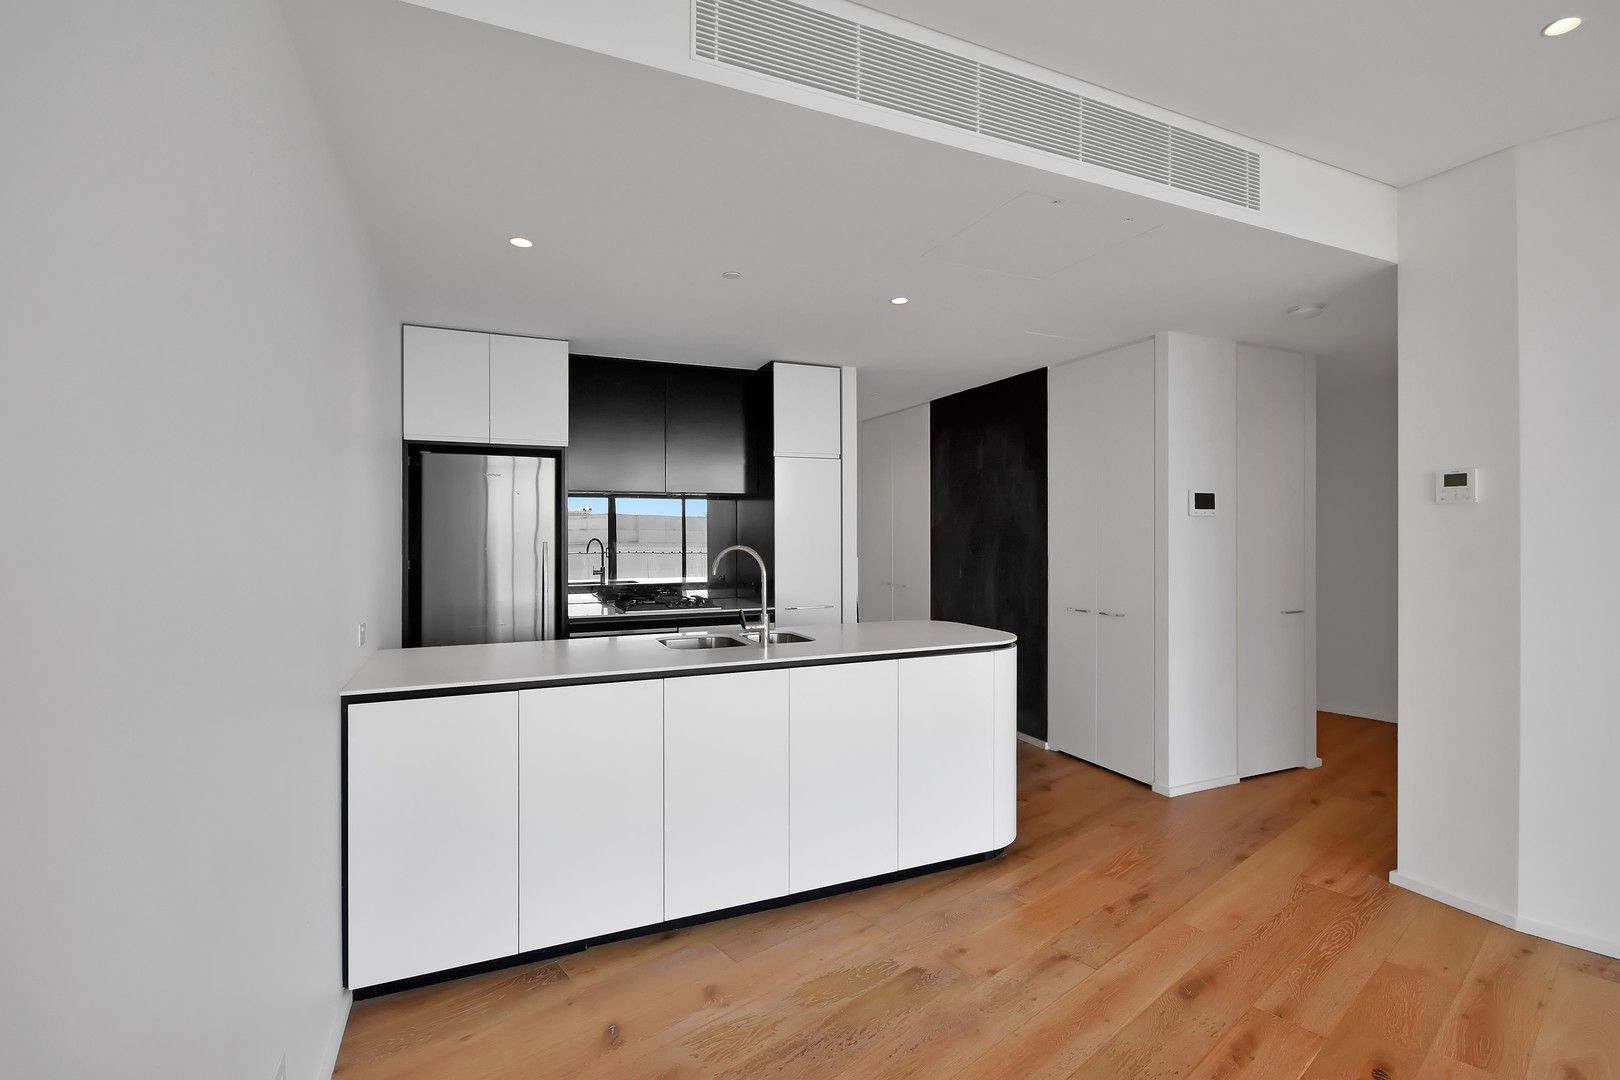 2 bedrooms Apartment / Unit / Flat in 902/241 Oxford Street BONDI JUNCTION NSW, 2022